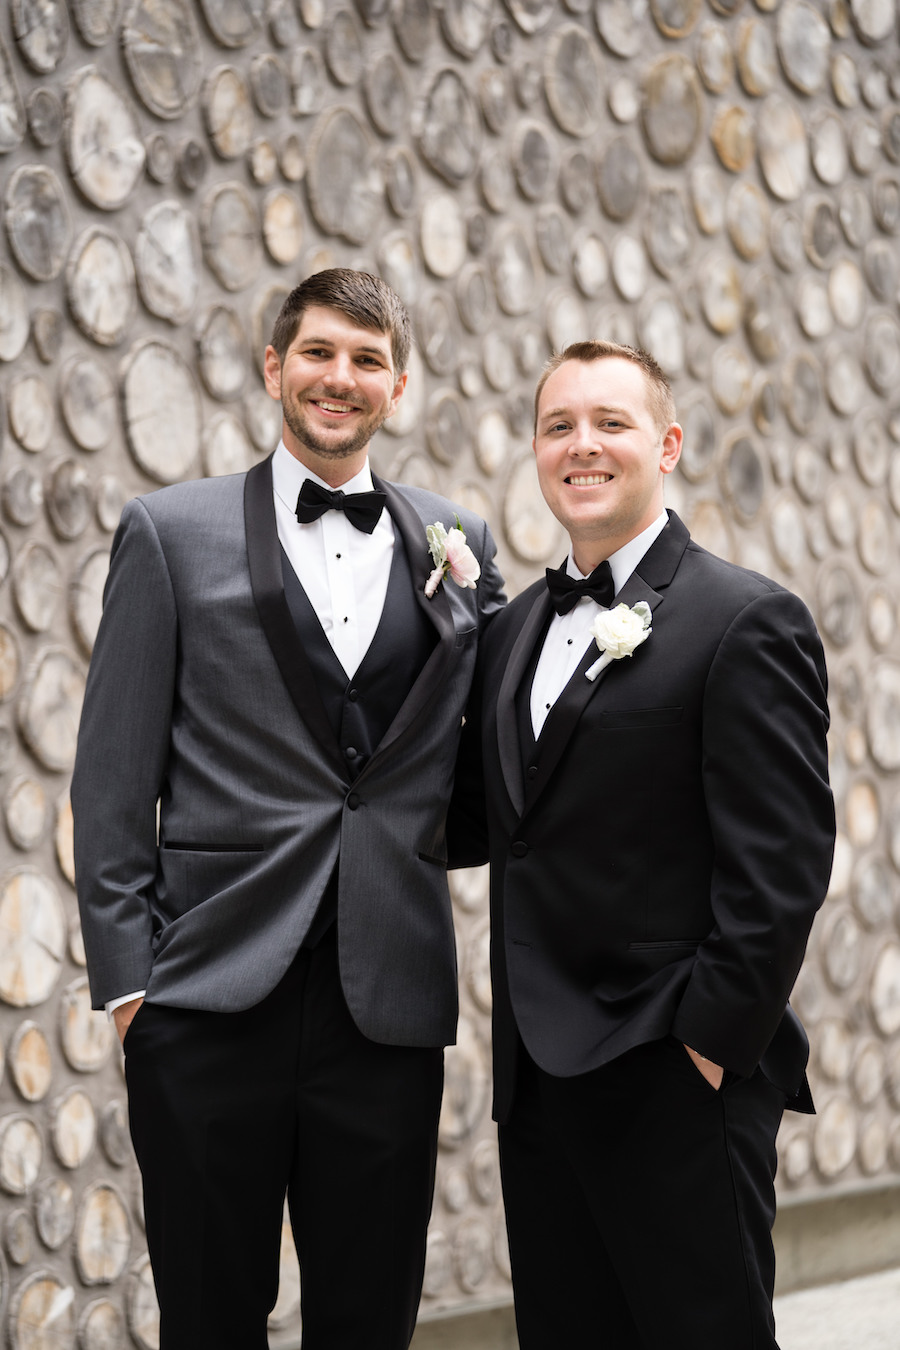 A groom and groomsman smiling before his Kalamazoo, Michigan wedding